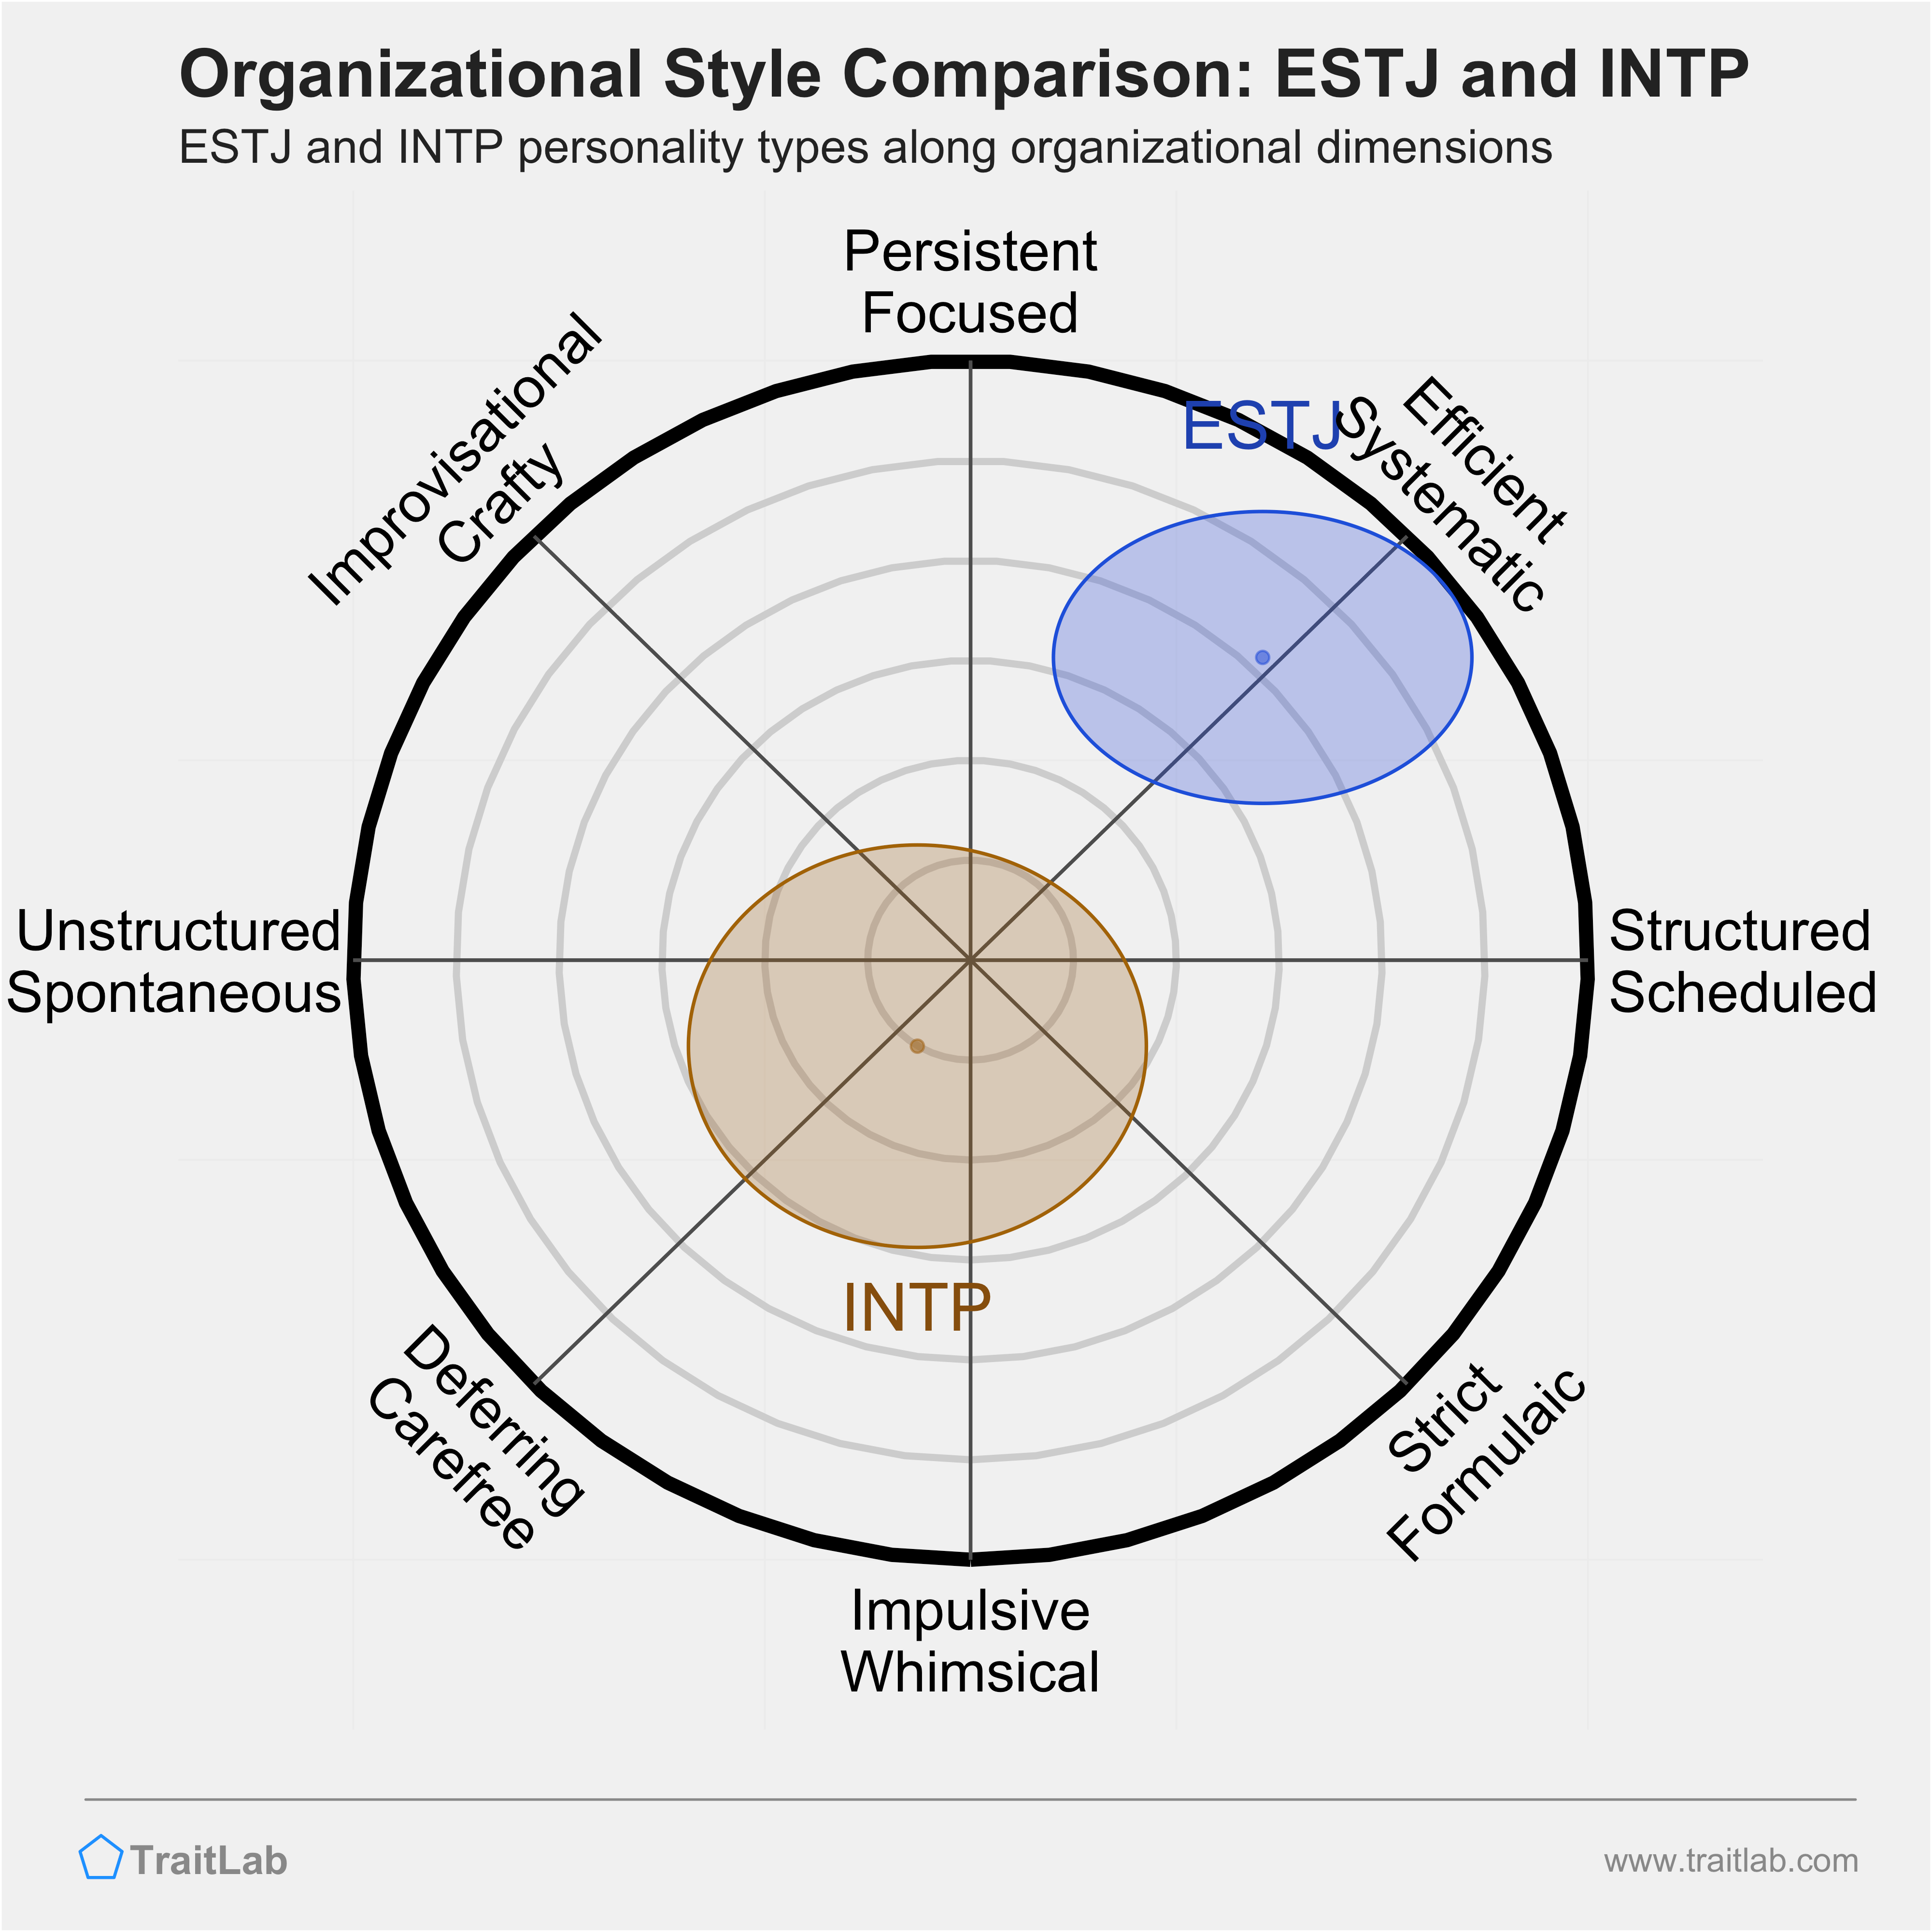 ESTJ and INTP comparison across organizational dimensions